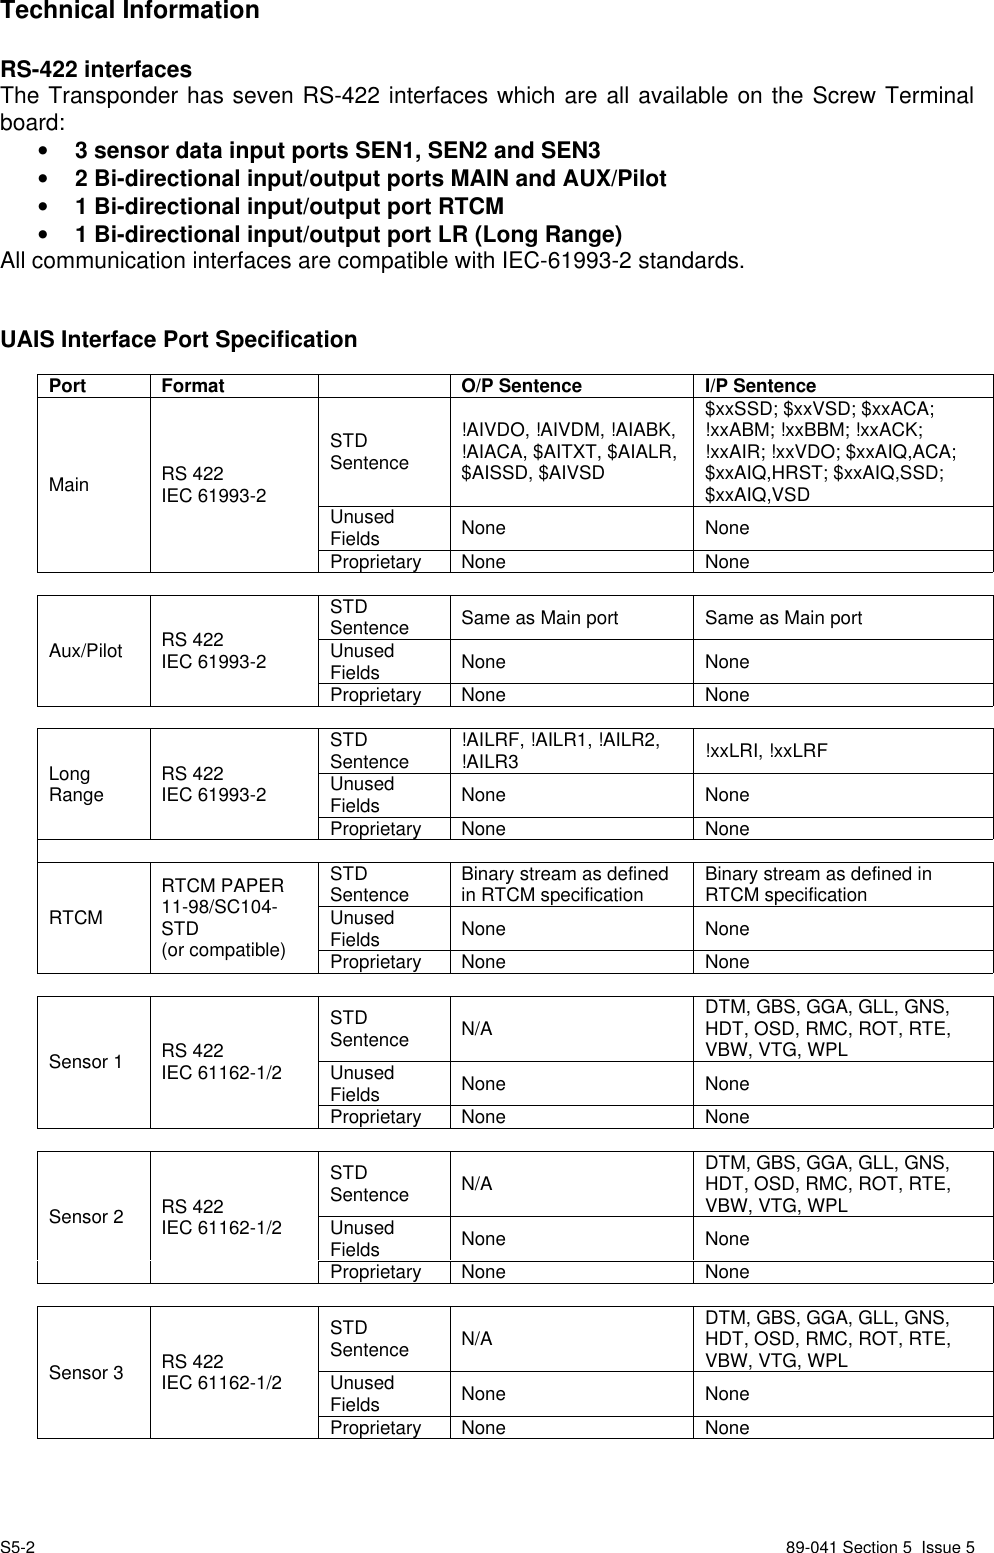 S5-2 89-041 Section 5  Issue 5Technical InformationRS-422 interfacesThe Transponder has seven RS-422 interfaces which are all available on the Screw Terminalboard:• 3 sensor data input ports SEN1, SEN2 and SEN3• 2 Bi-directional input/output ports MAIN and AUX/Pilot• 1 Bi-directional input/output port RTCM• 1 Bi-directional input/output port LR (Long Range)All communication interfaces are compatible with IEC-61993-2 standards.UAIS Interface Port SpecificationPort Format O/P Sentence I/P SentenceSTDSentence!AIVDO, !AIVDM, !AIABK,!AIACA, $AITXT, $AIALR,$AISSD, $AIVSD$xxSSD; $xxVSD; $xxACA;!xxABM; !xxBBM; !xxACK;!xxAIR; !xxVDO; $xxAIQ,ACA;$xxAIQ,HRST; $xxAIQ,SSD;$xxAIQ,VSDUnusedFields None NoneMain RS 422IEC 61993-2Proprietary None NoneSTDSentence Same as Main port Same as Main portUnusedFields None NoneAux/Pilot RS 422IEC 61993-2Proprietary None NoneSTDSentence !AILRF, !AILR1, !AILR2,!AILR3 !xxLRI, !xxLRFUnusedFields None NoneLongRange RS 422IEC 61993-2Proprietary None NoneSTDSentence Binary stream as definedin RTCM specification Binary stream as defined inRTCM specificationUnusedFields None NoneRTCMRTCM PAPER11-98/SC104-STD(or compatible) Proprietary None NoneSTDSentence N/A DTM, GBS, GGA, GLL, GNS,HDT, OSD, RMC, ROT, RTE,VBW, VTG, WPLUnusedFields None NoneSensor 1 RS 422IEC 61162-1/2Proprietary None NoneSTDSentence N/A DTM, GBS, GGA, GLL, GNS,HDT, OSD, RMC, ROT, RTE,VBW, VTG, WPLUnusedFields None NoneSensor 2 RS 422IEC 61162-1/2Proprietary None NoneSTDSentence N/A DTM, GBS, GGA, GLL, GNS,HDT, OSD, RMC, ROT, RTE,VBW, VTG, WPLUnusedFields None NoneSensor 3 RS 422IEC 61162-1/2Proprietary None None